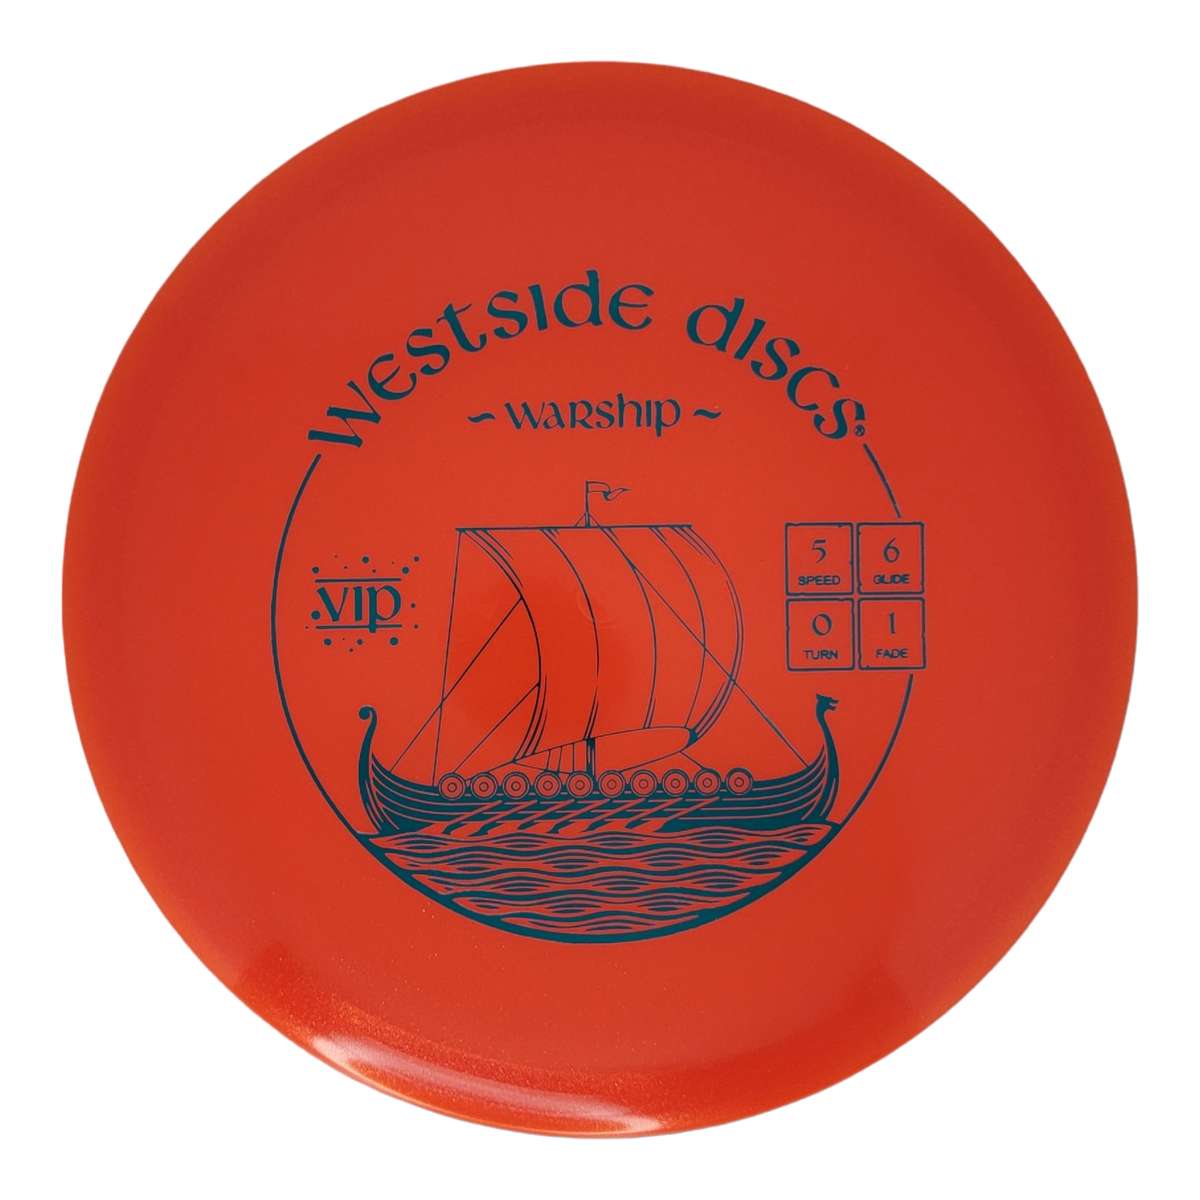 Westside Discs VIP Glimmer Warship